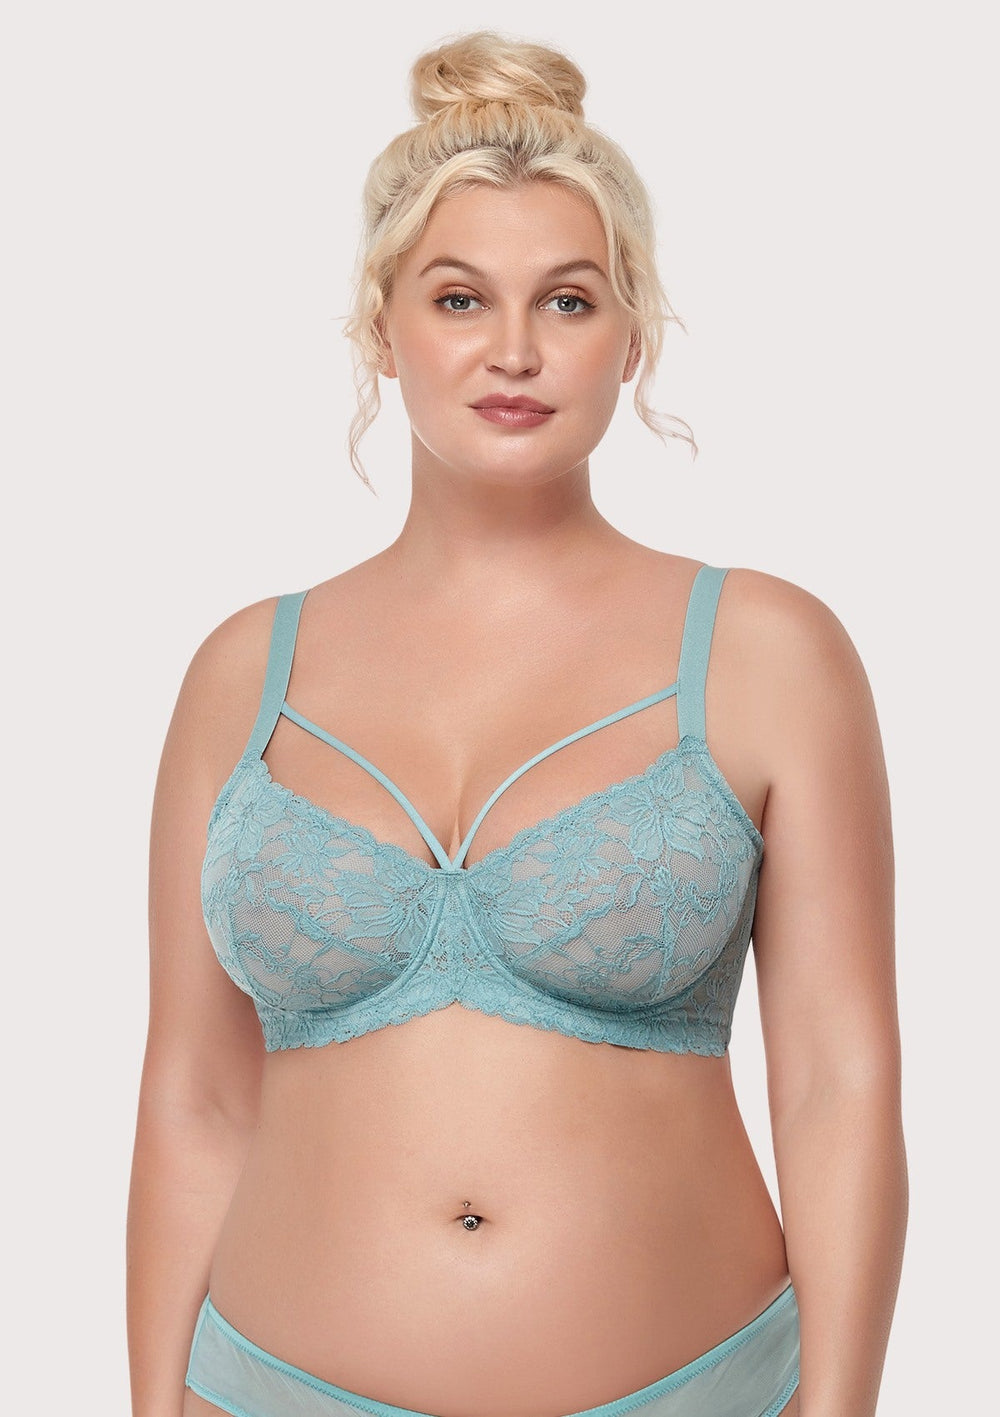 Wholesale 32 c size bra For Supportive Underwear 